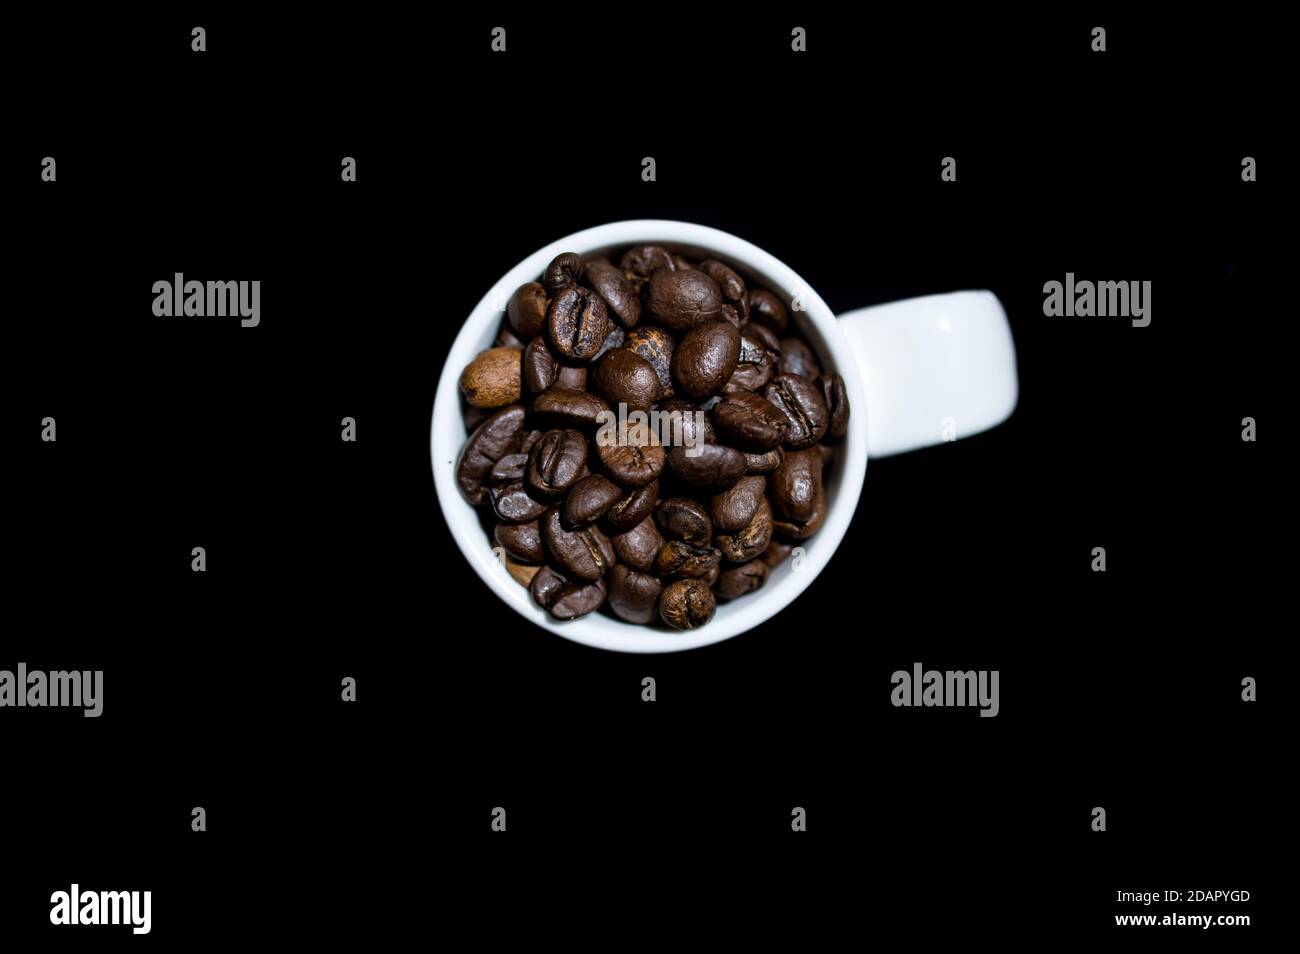 Espresso coffee mug on a black background full of coffee beans Stock Photo